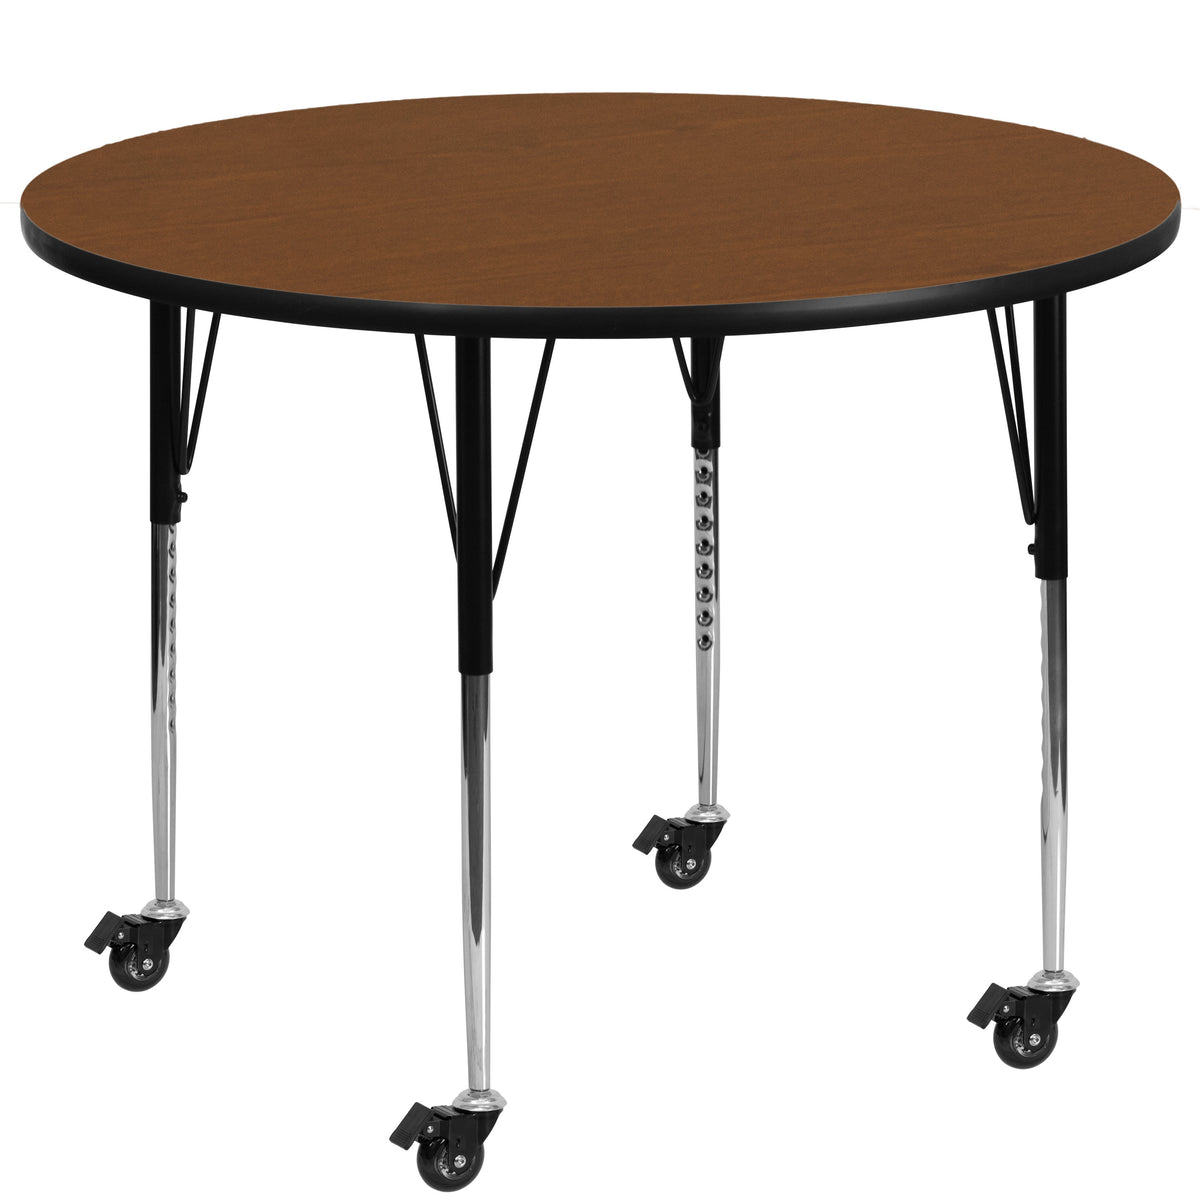 Oak |#| Mobile 42inch RD Oak HP Laminate Activity Table - Standard Height Adjustable Legs